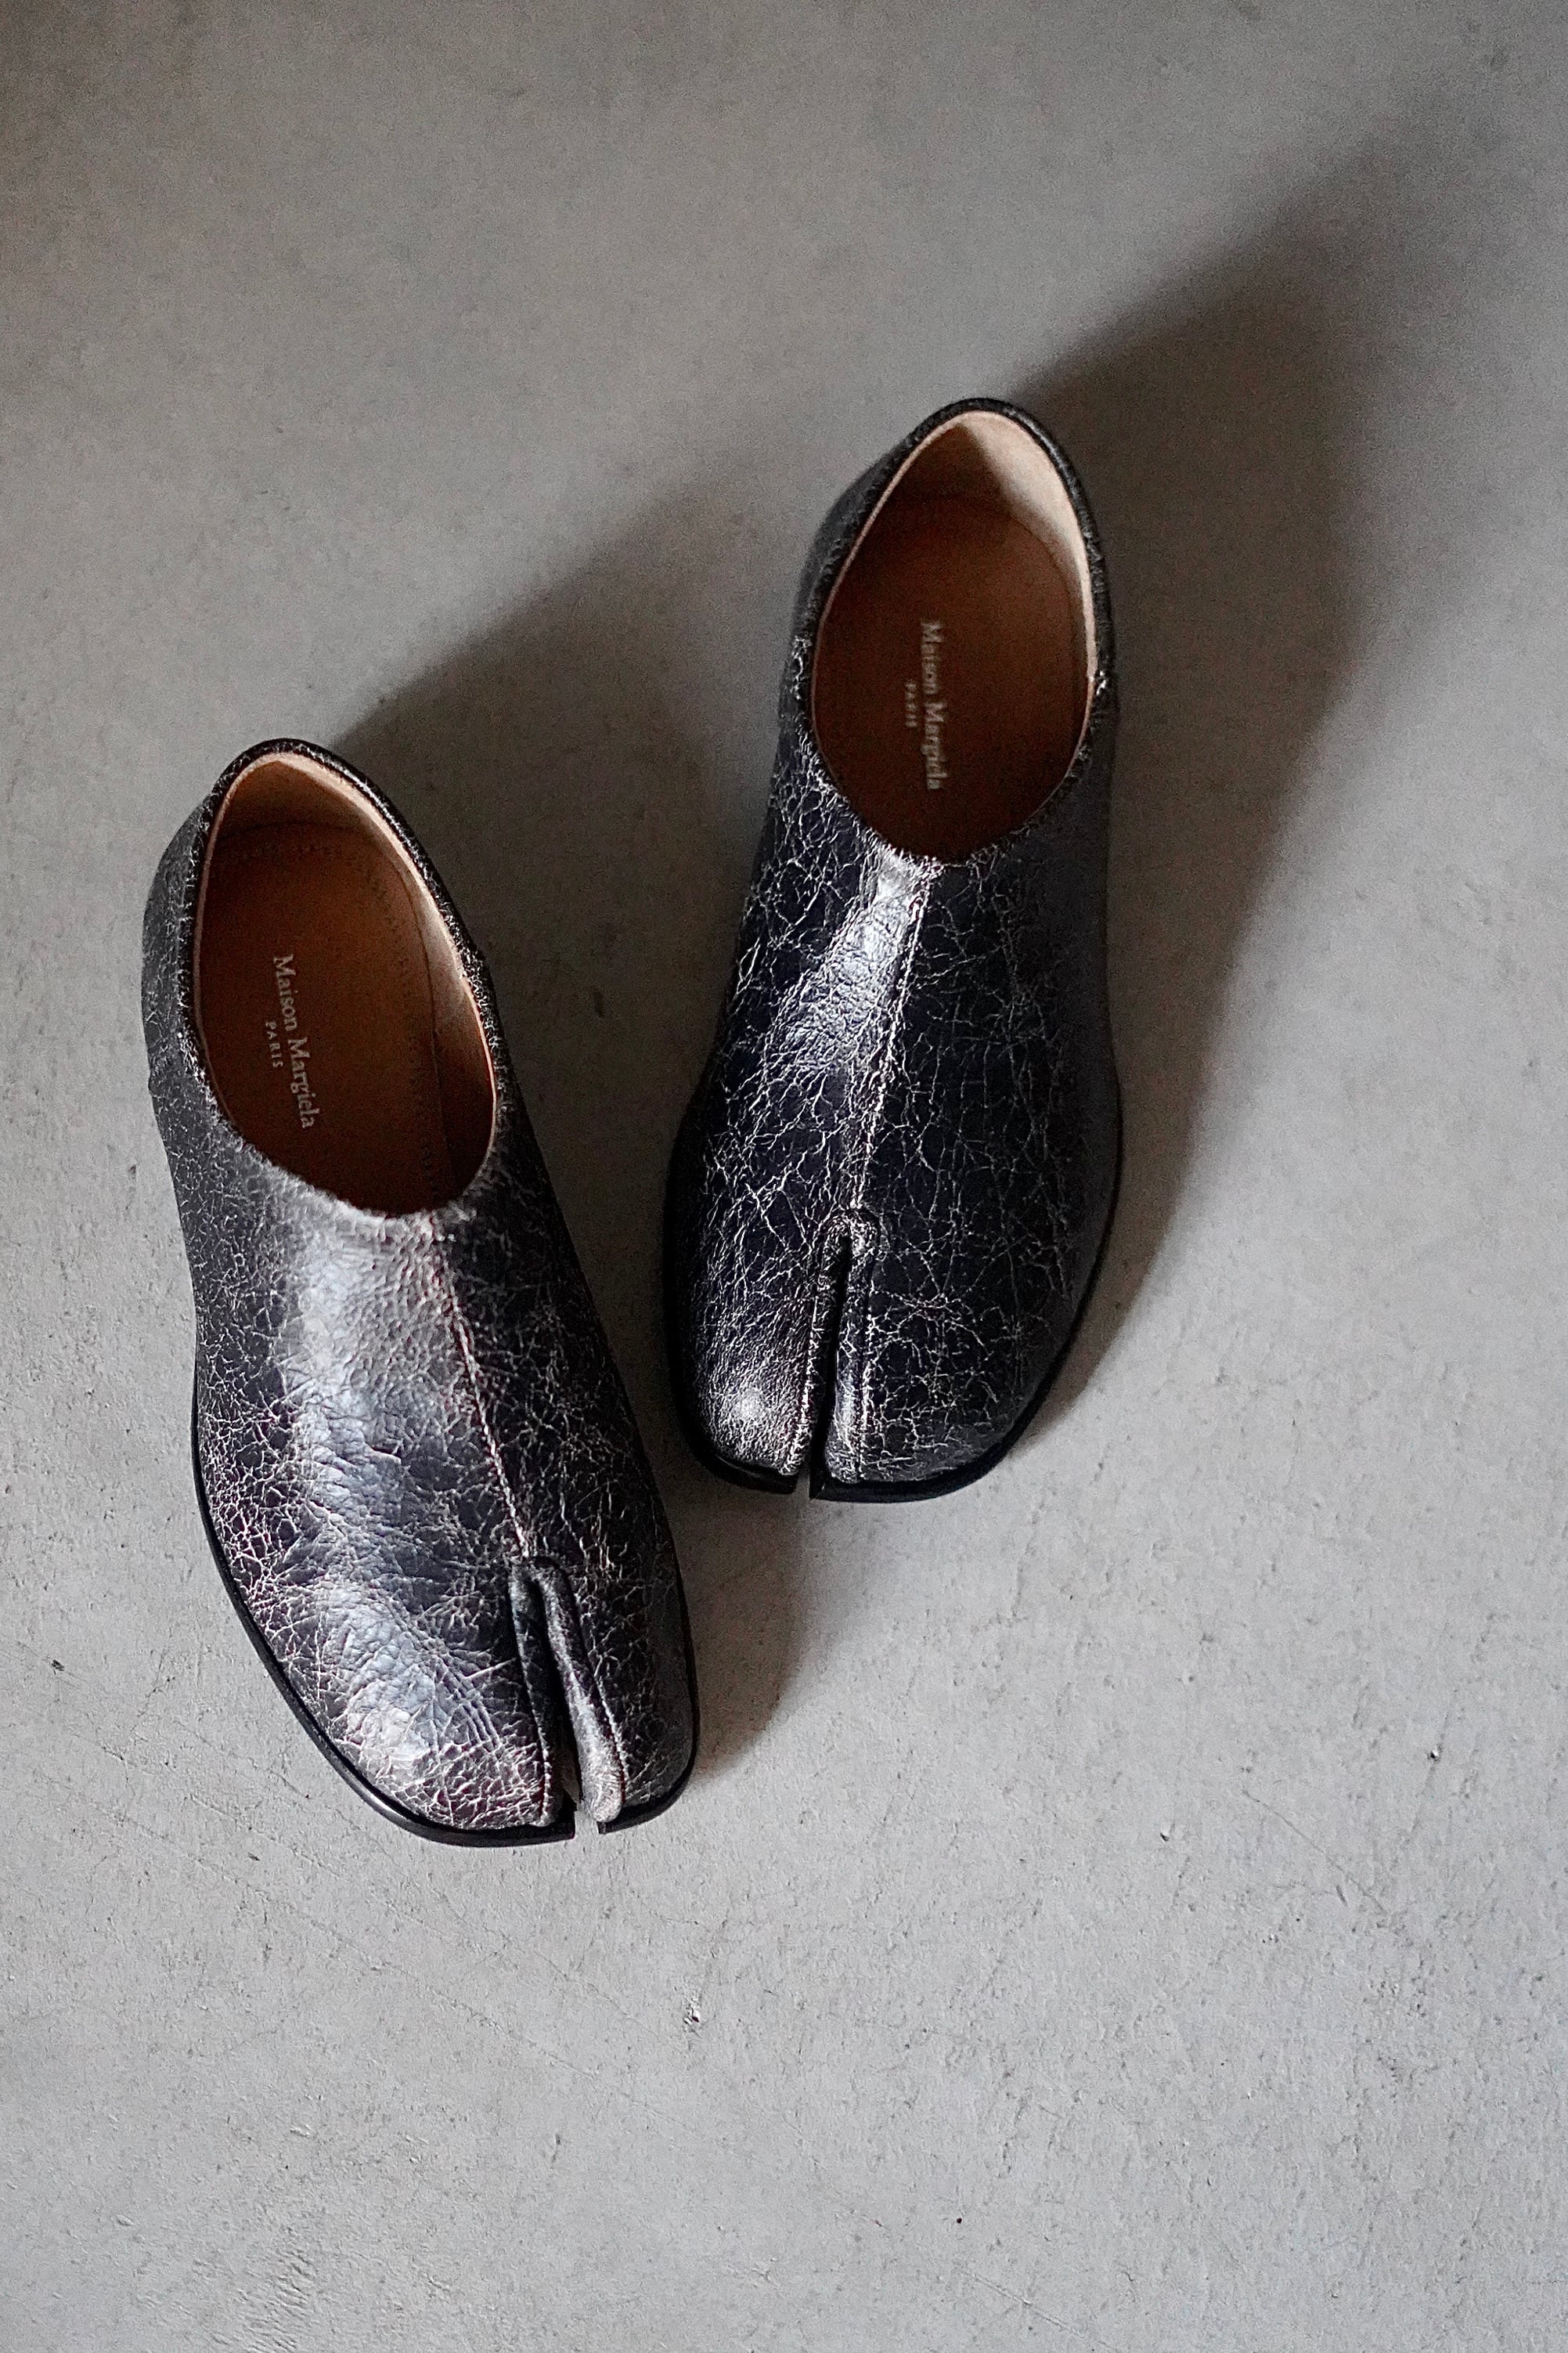 Maison Margiela / Tabi shoes (beige/black) | JUQUI Online